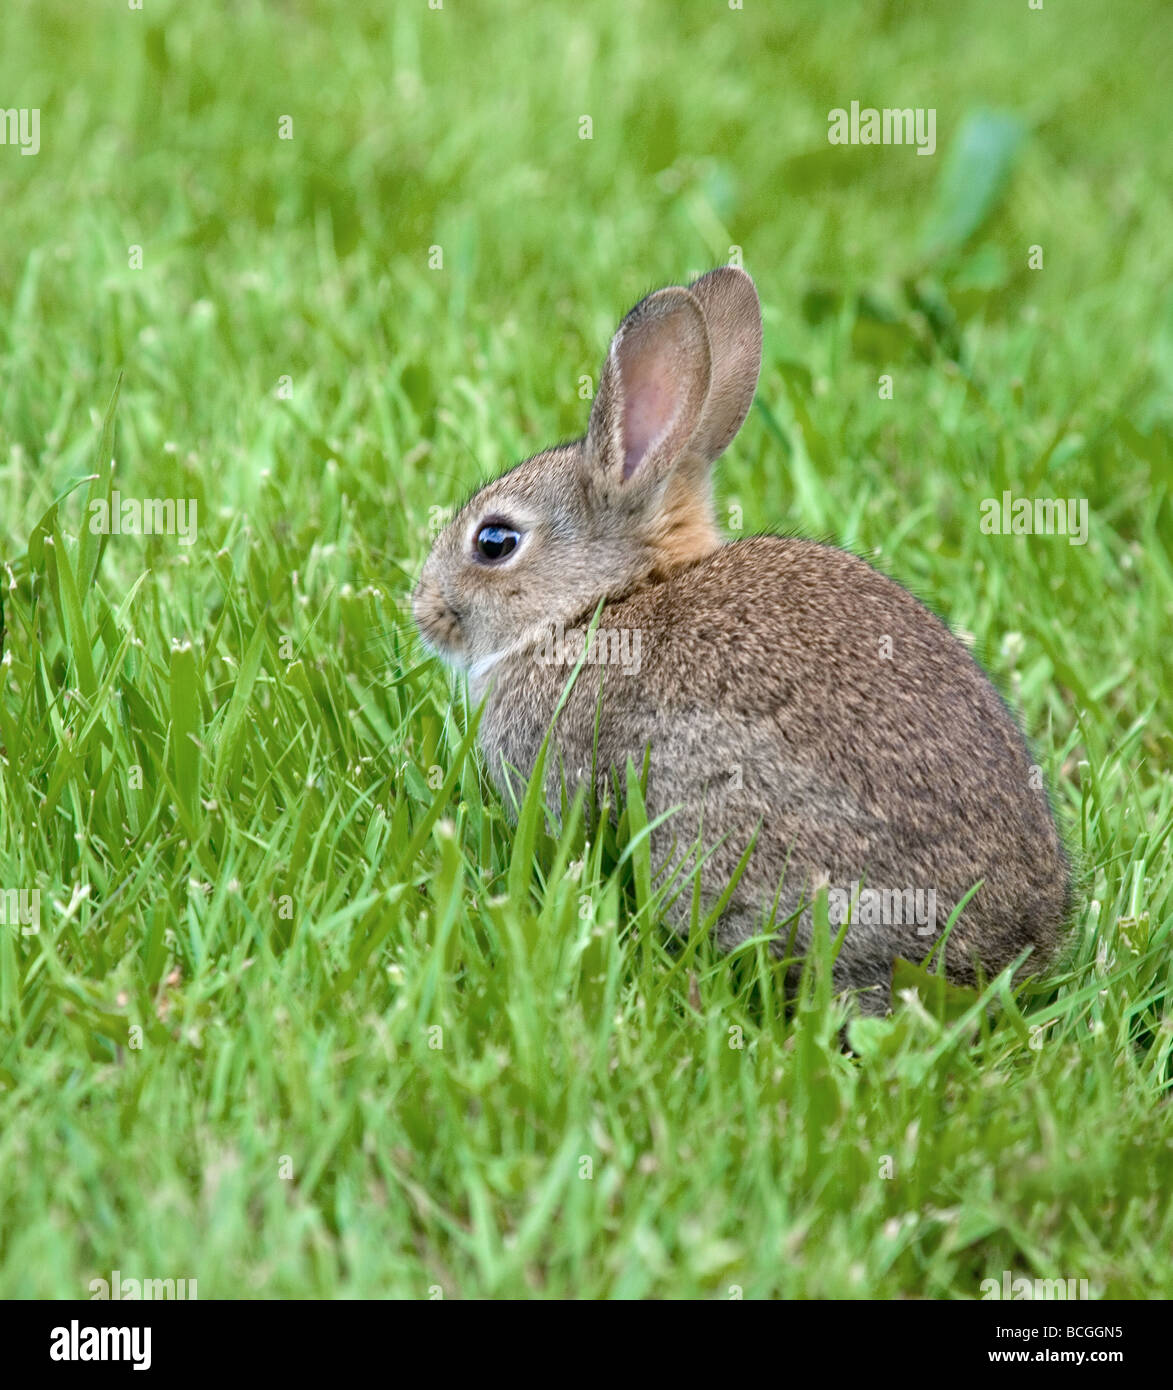 Young European rabbit Oryctolagus cuniculus feeding on spring grass Stock Photo